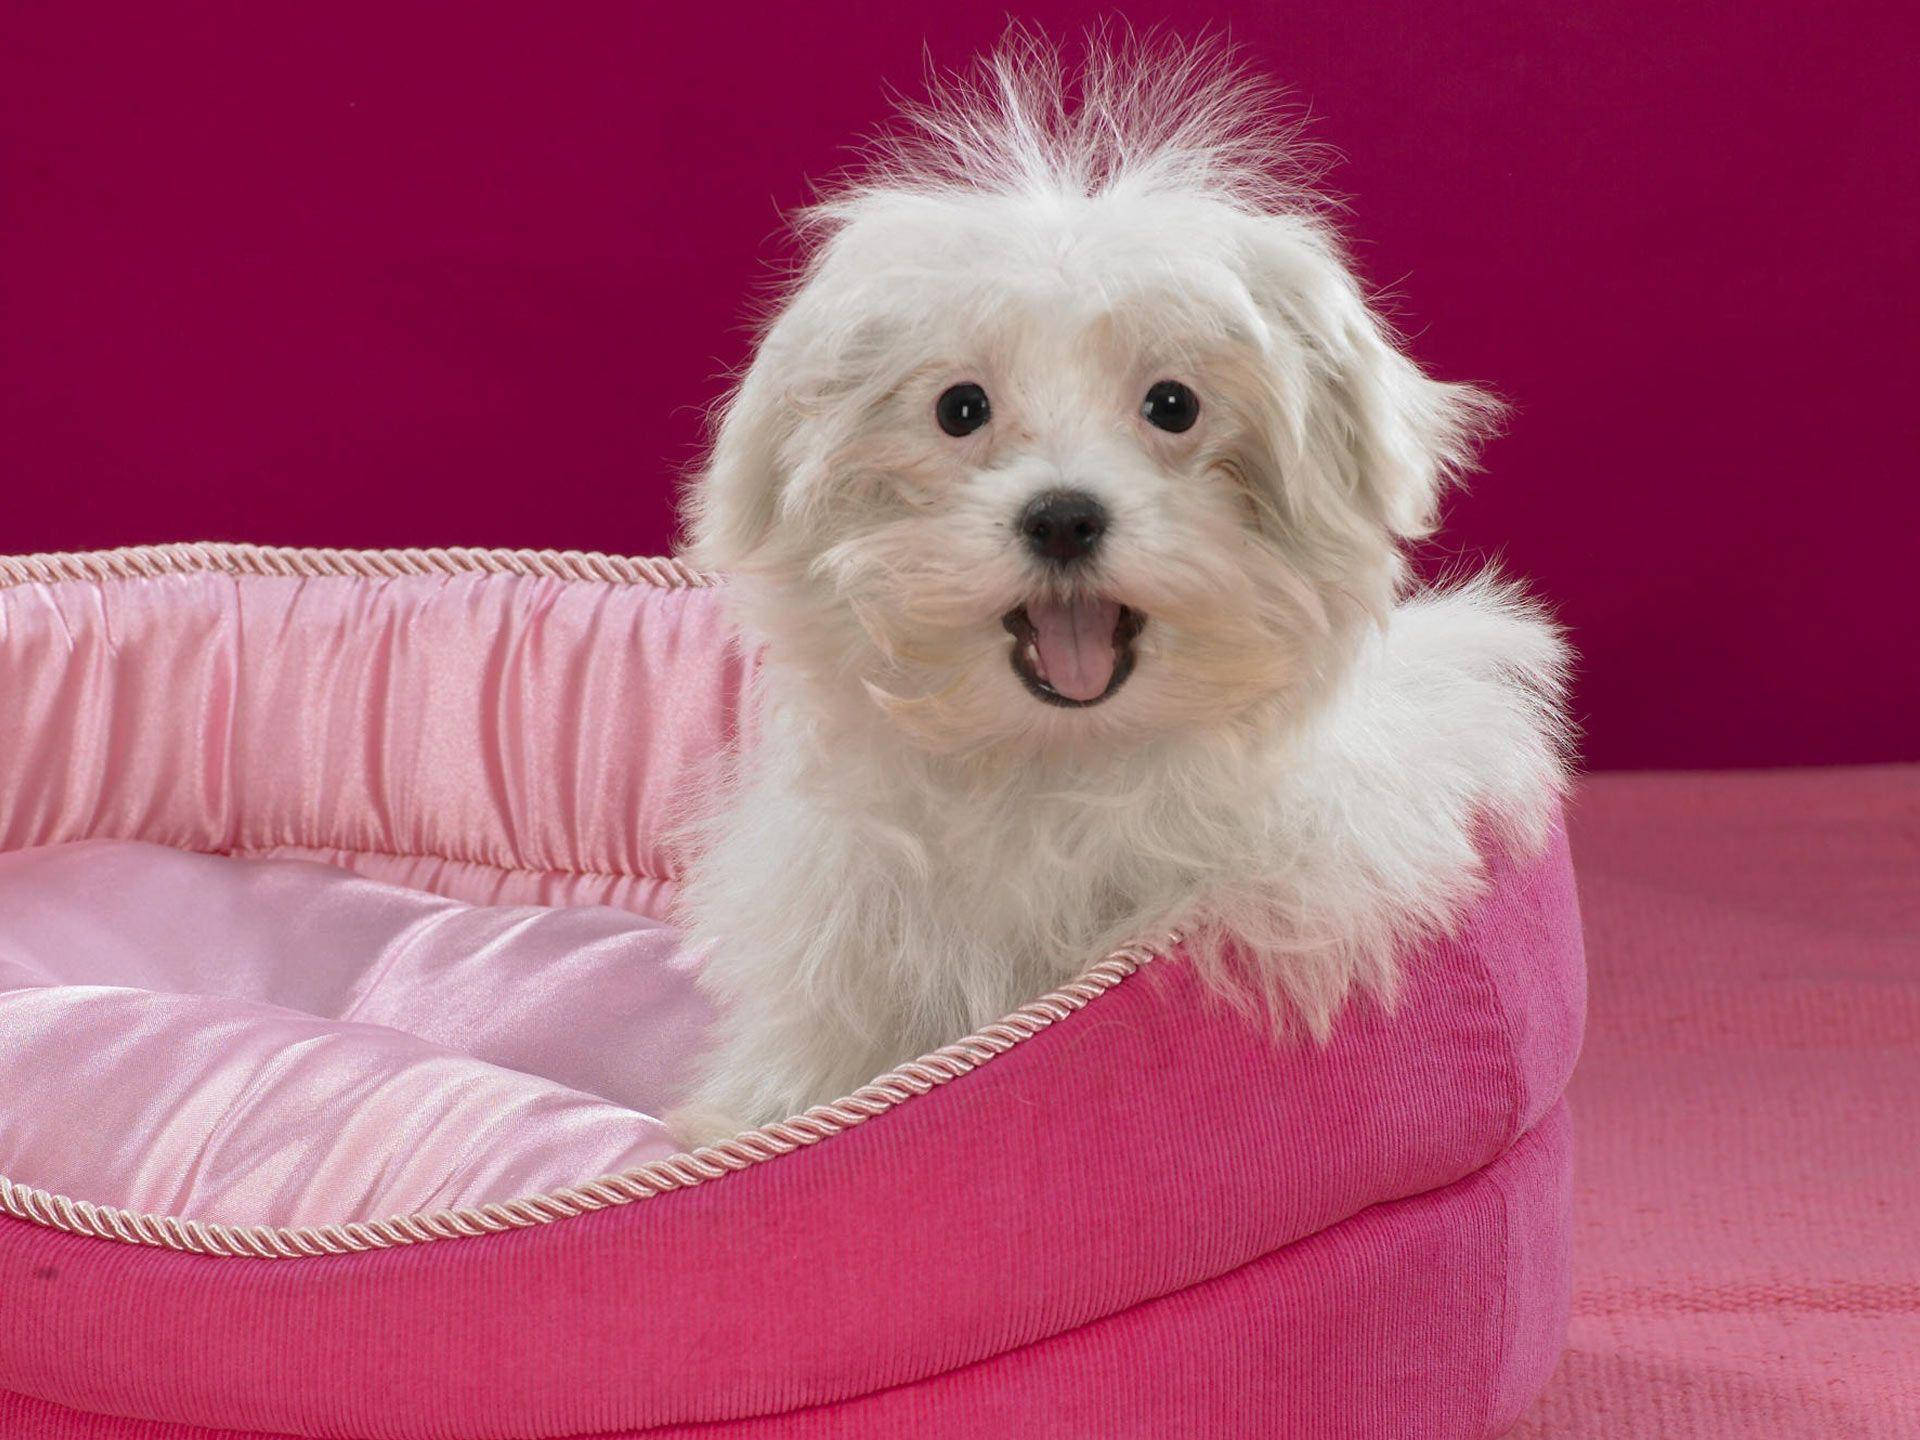 White Fluffy Dogin Pink Bed.jpg Wallpaper